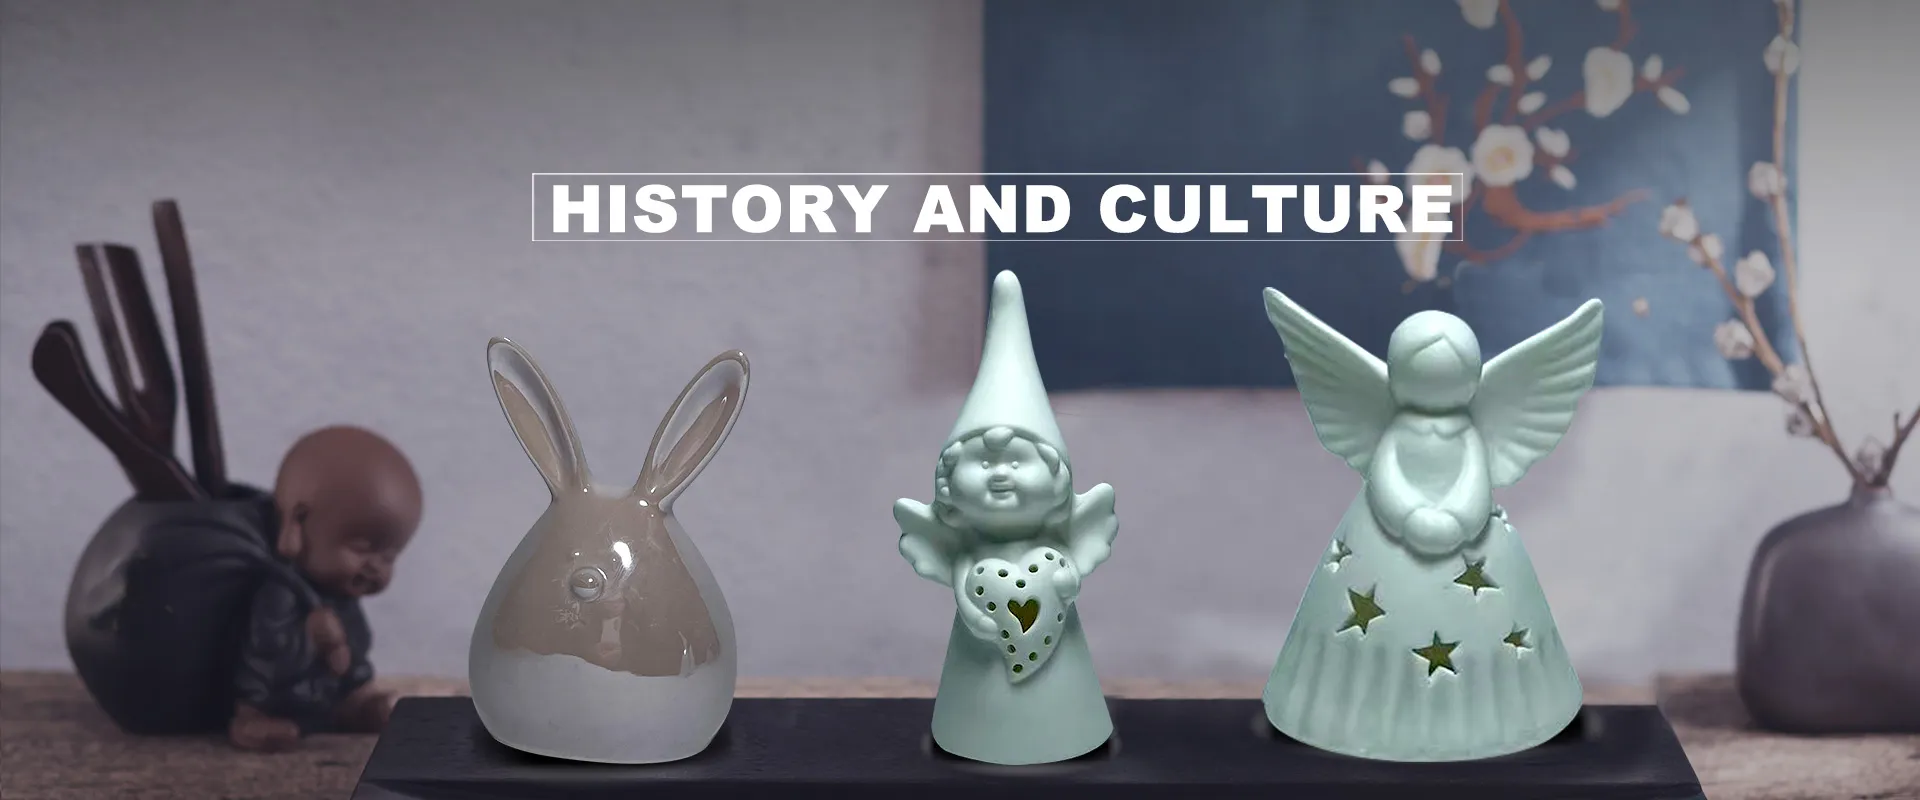 historie og kultur